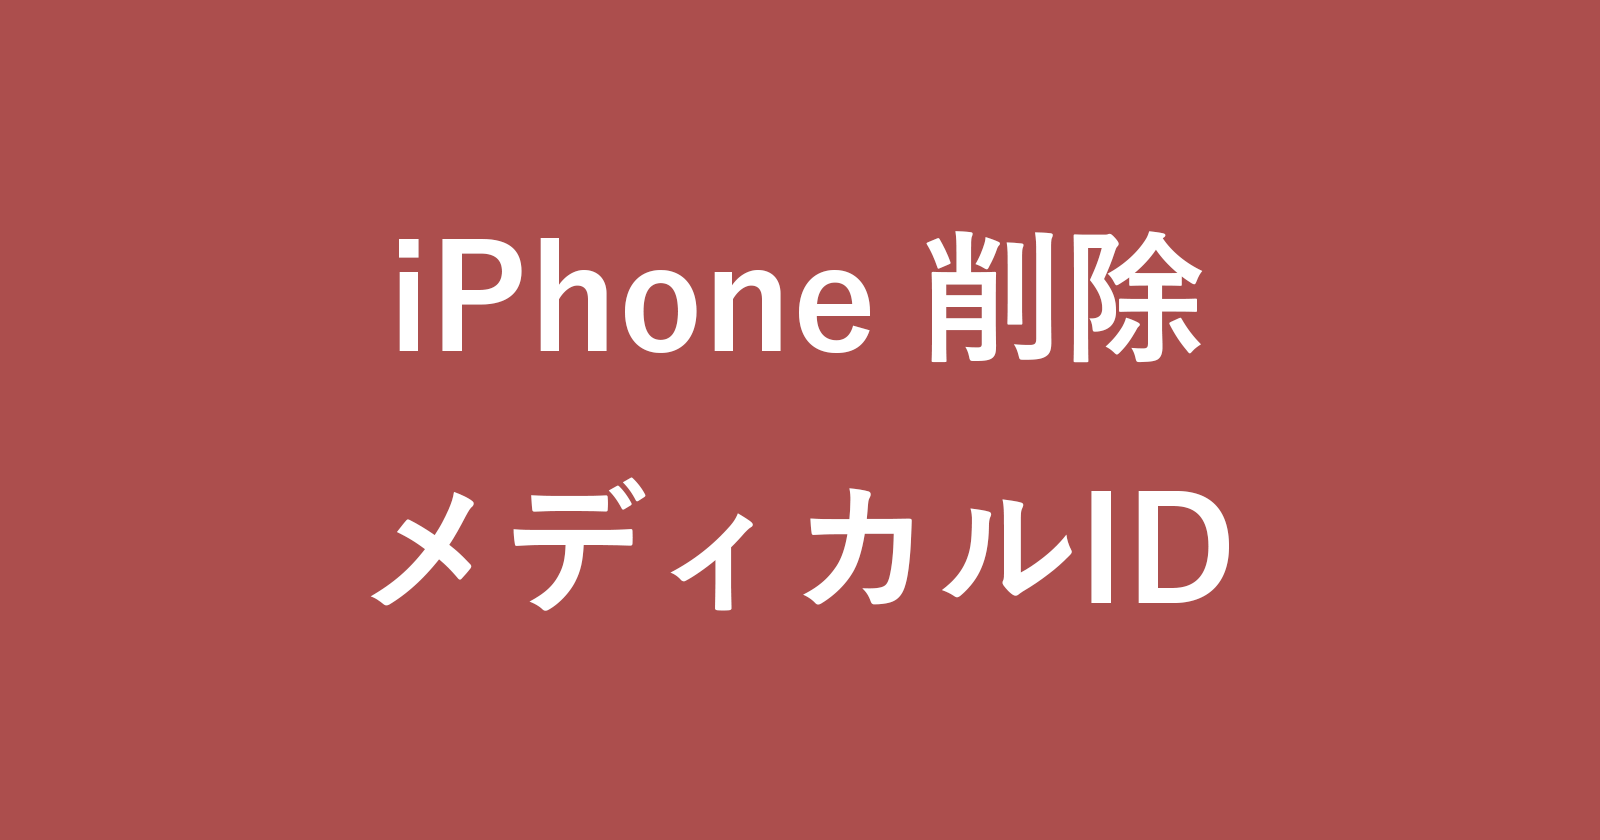 iphone delete medical id